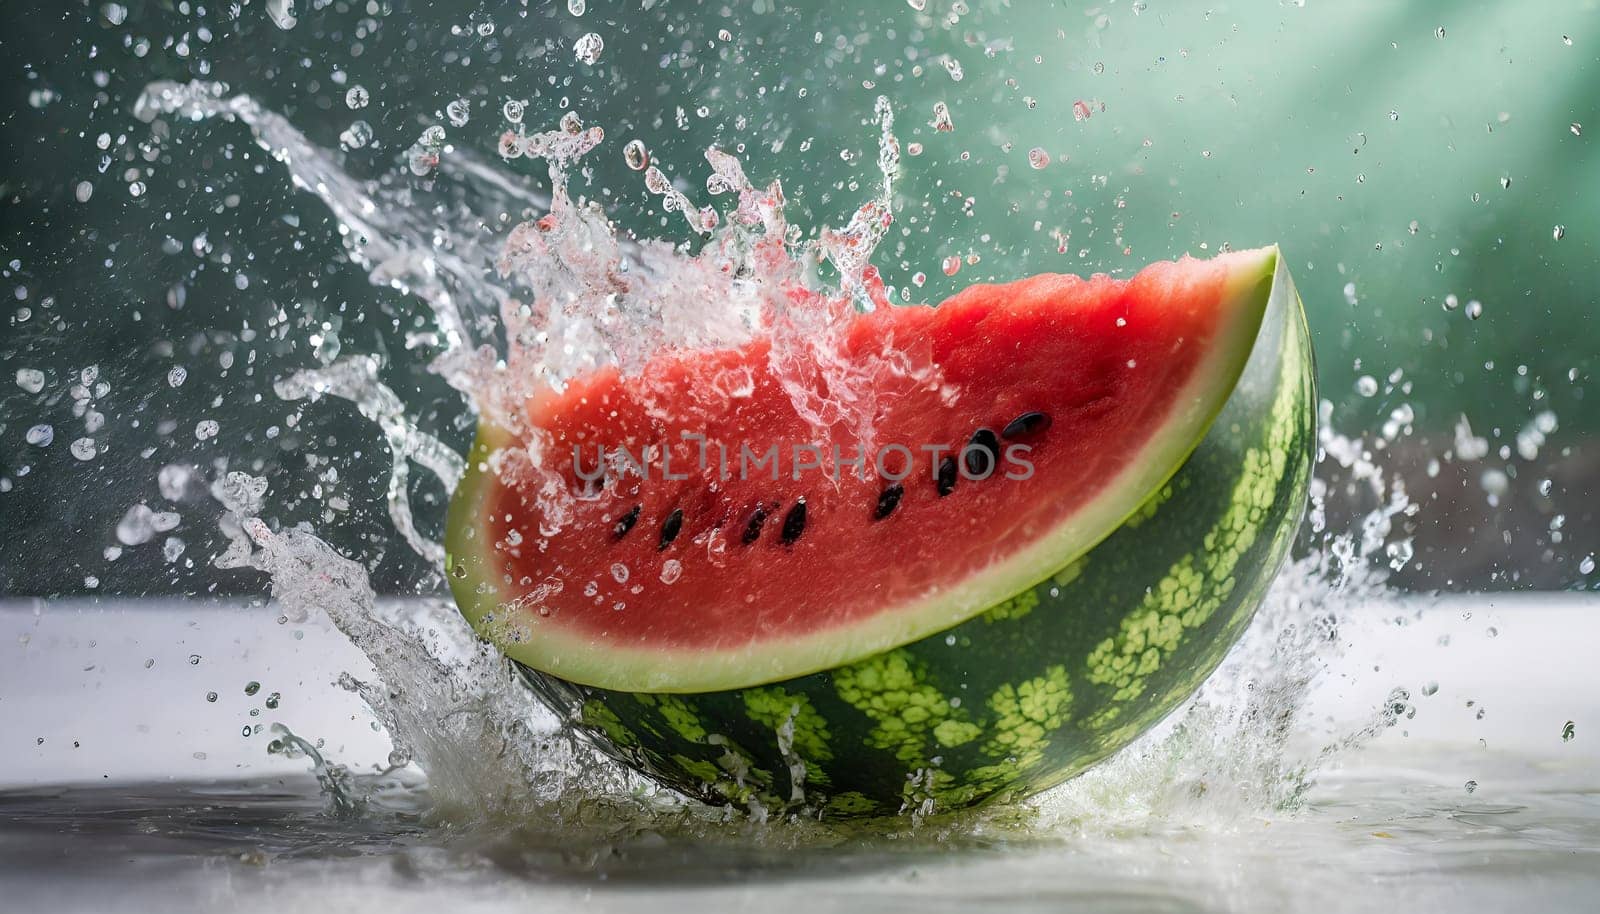 A watermelon drops, splashing water around by Designlab